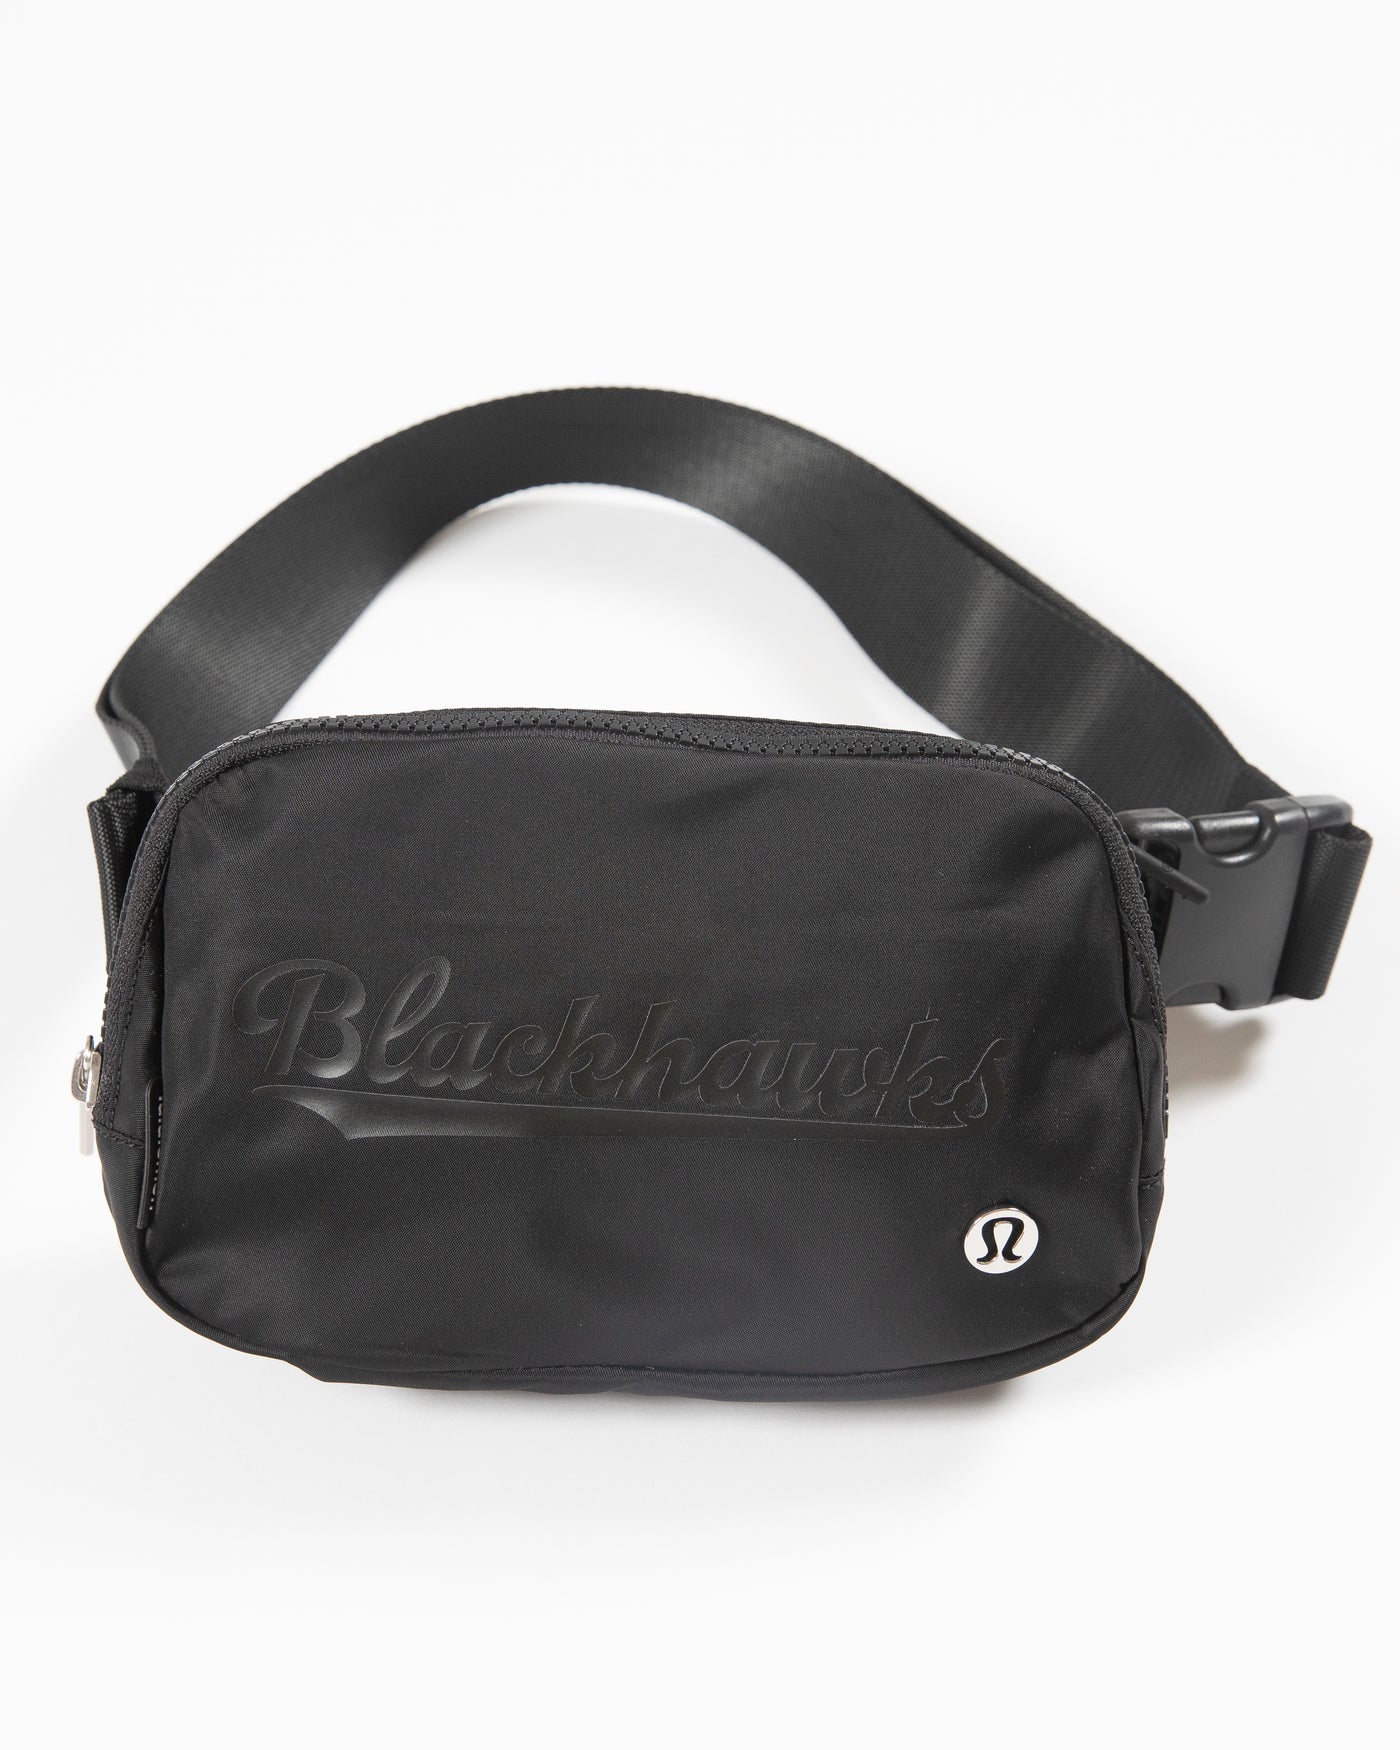 black lululemon Everywhere Belt Bag with Chicago Blackhawks wordmark graphic in black across front - front lay flat